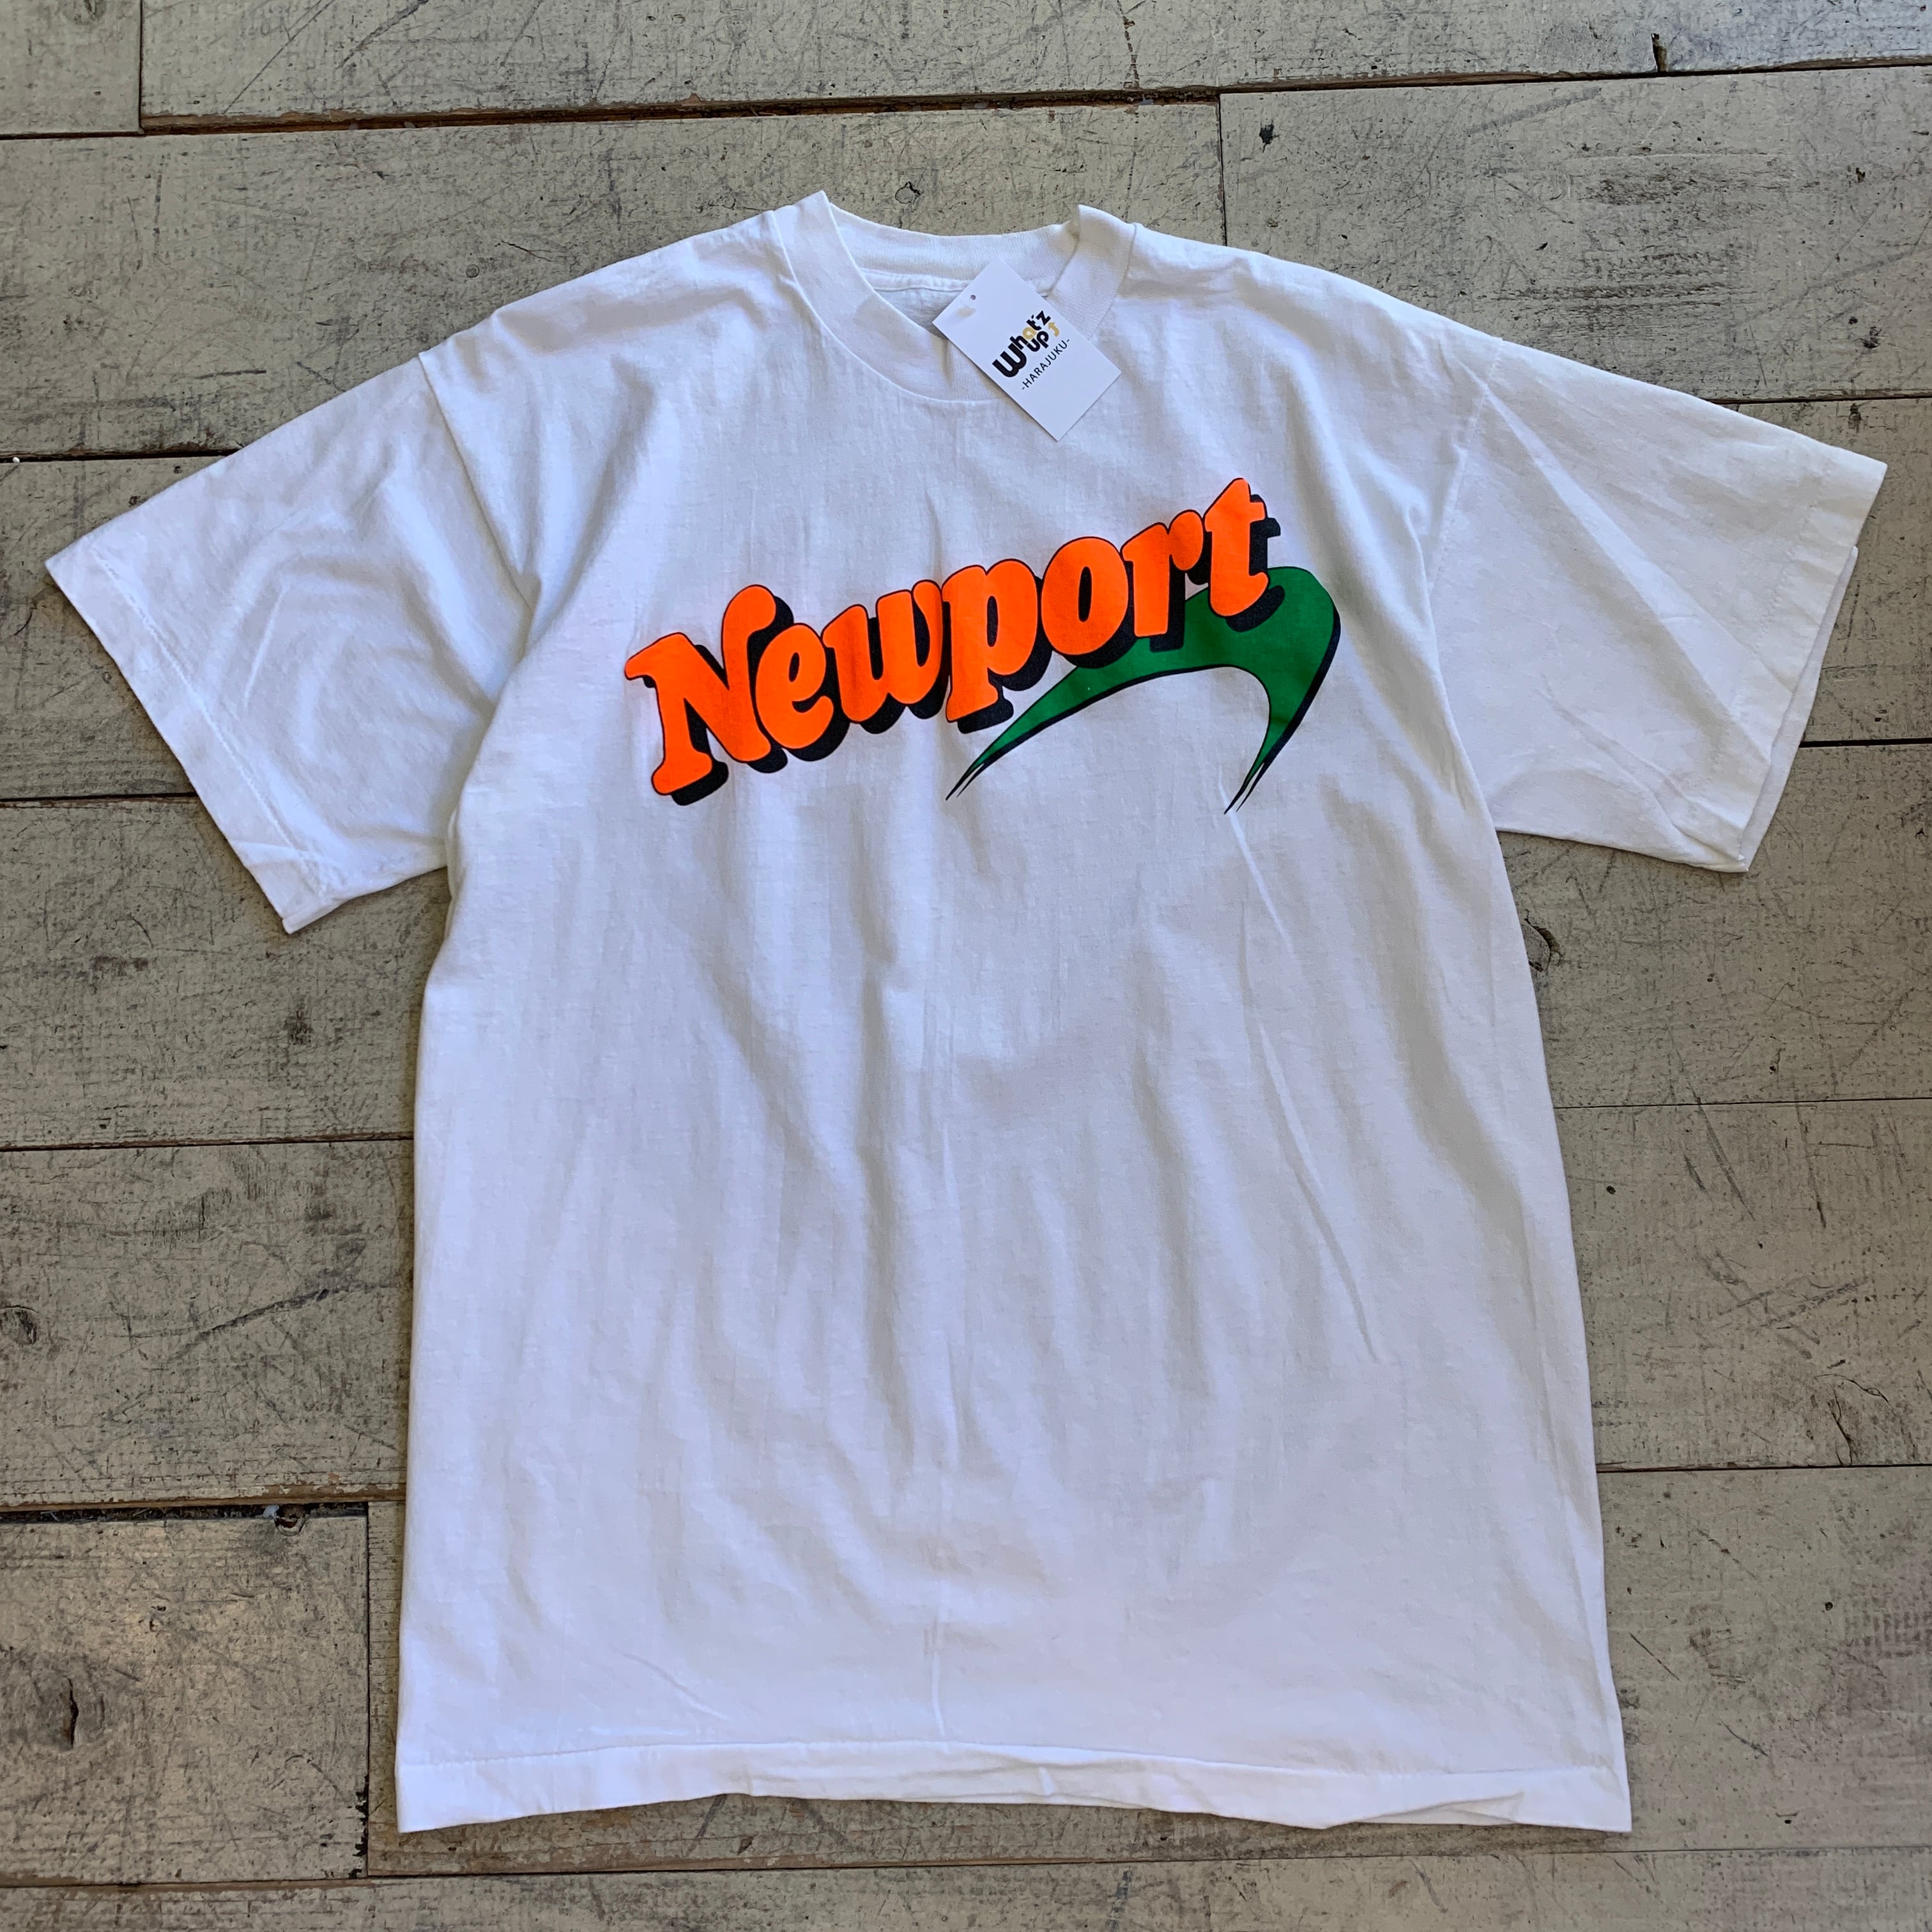 90s Newport Tee | What'z up